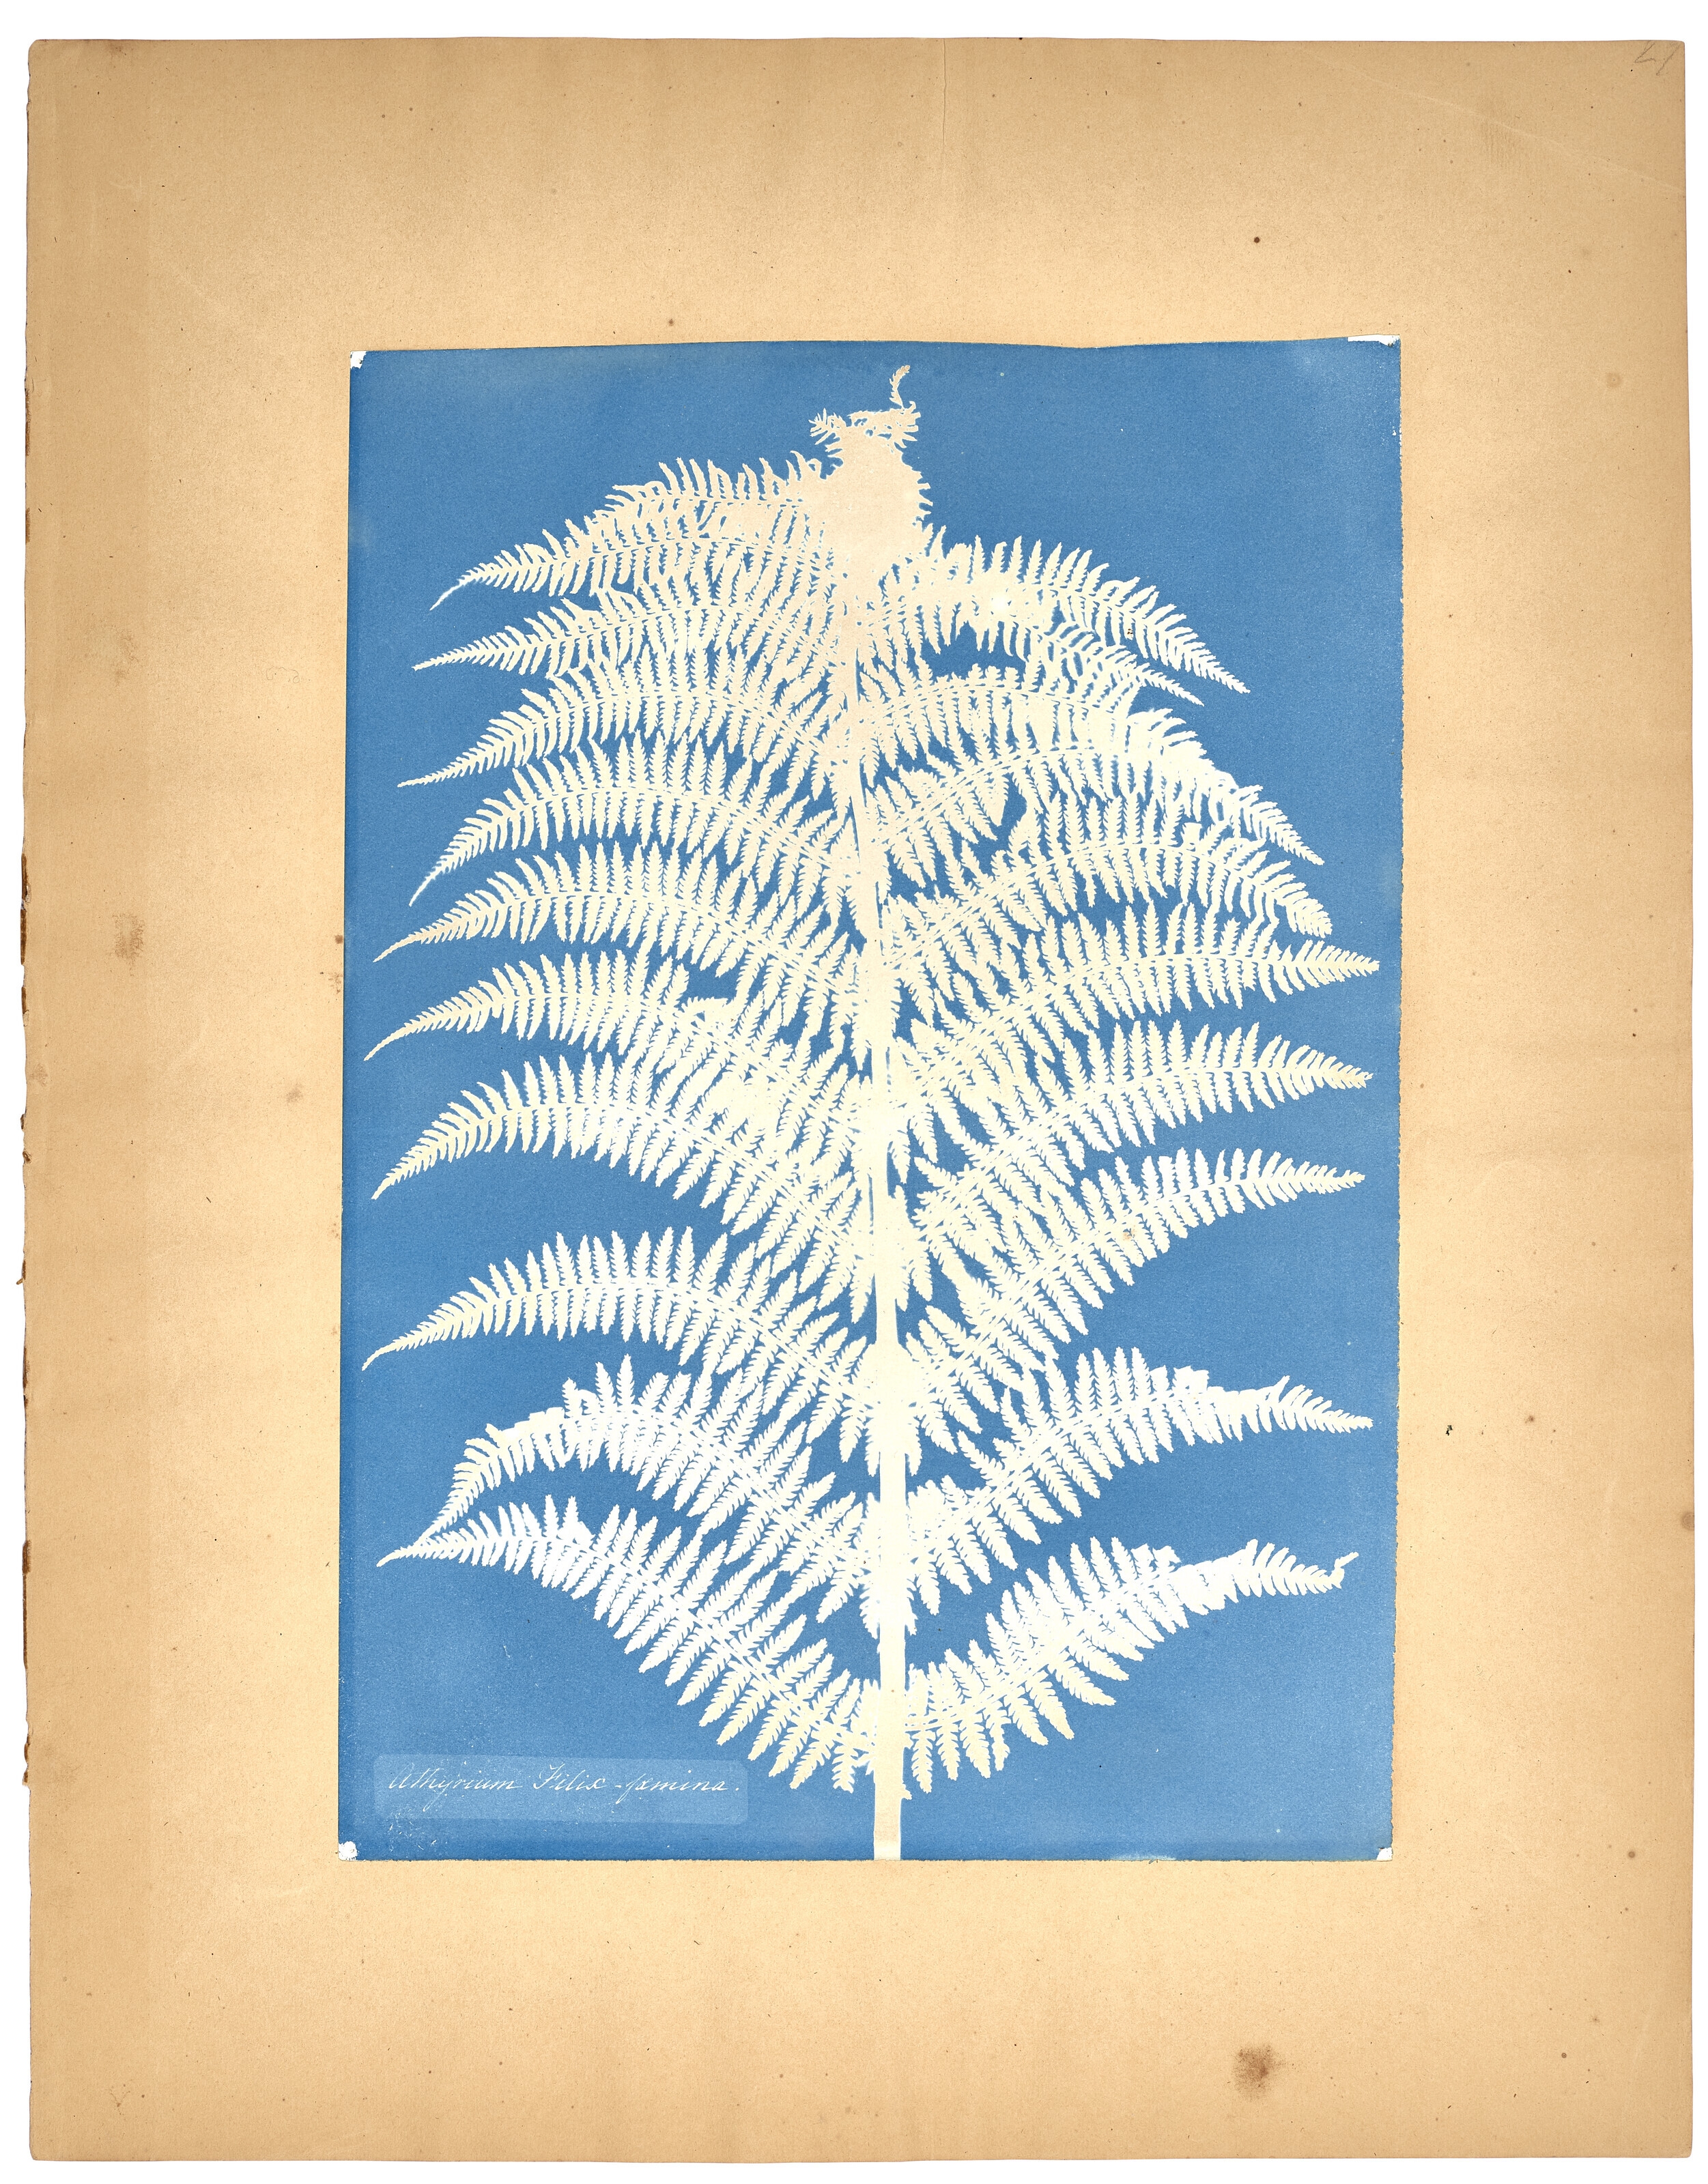 Artwork by Anna Atkins, Athyrium Filif-Foemina, c. 1850, Made of unique cyanotype, mounted on paper